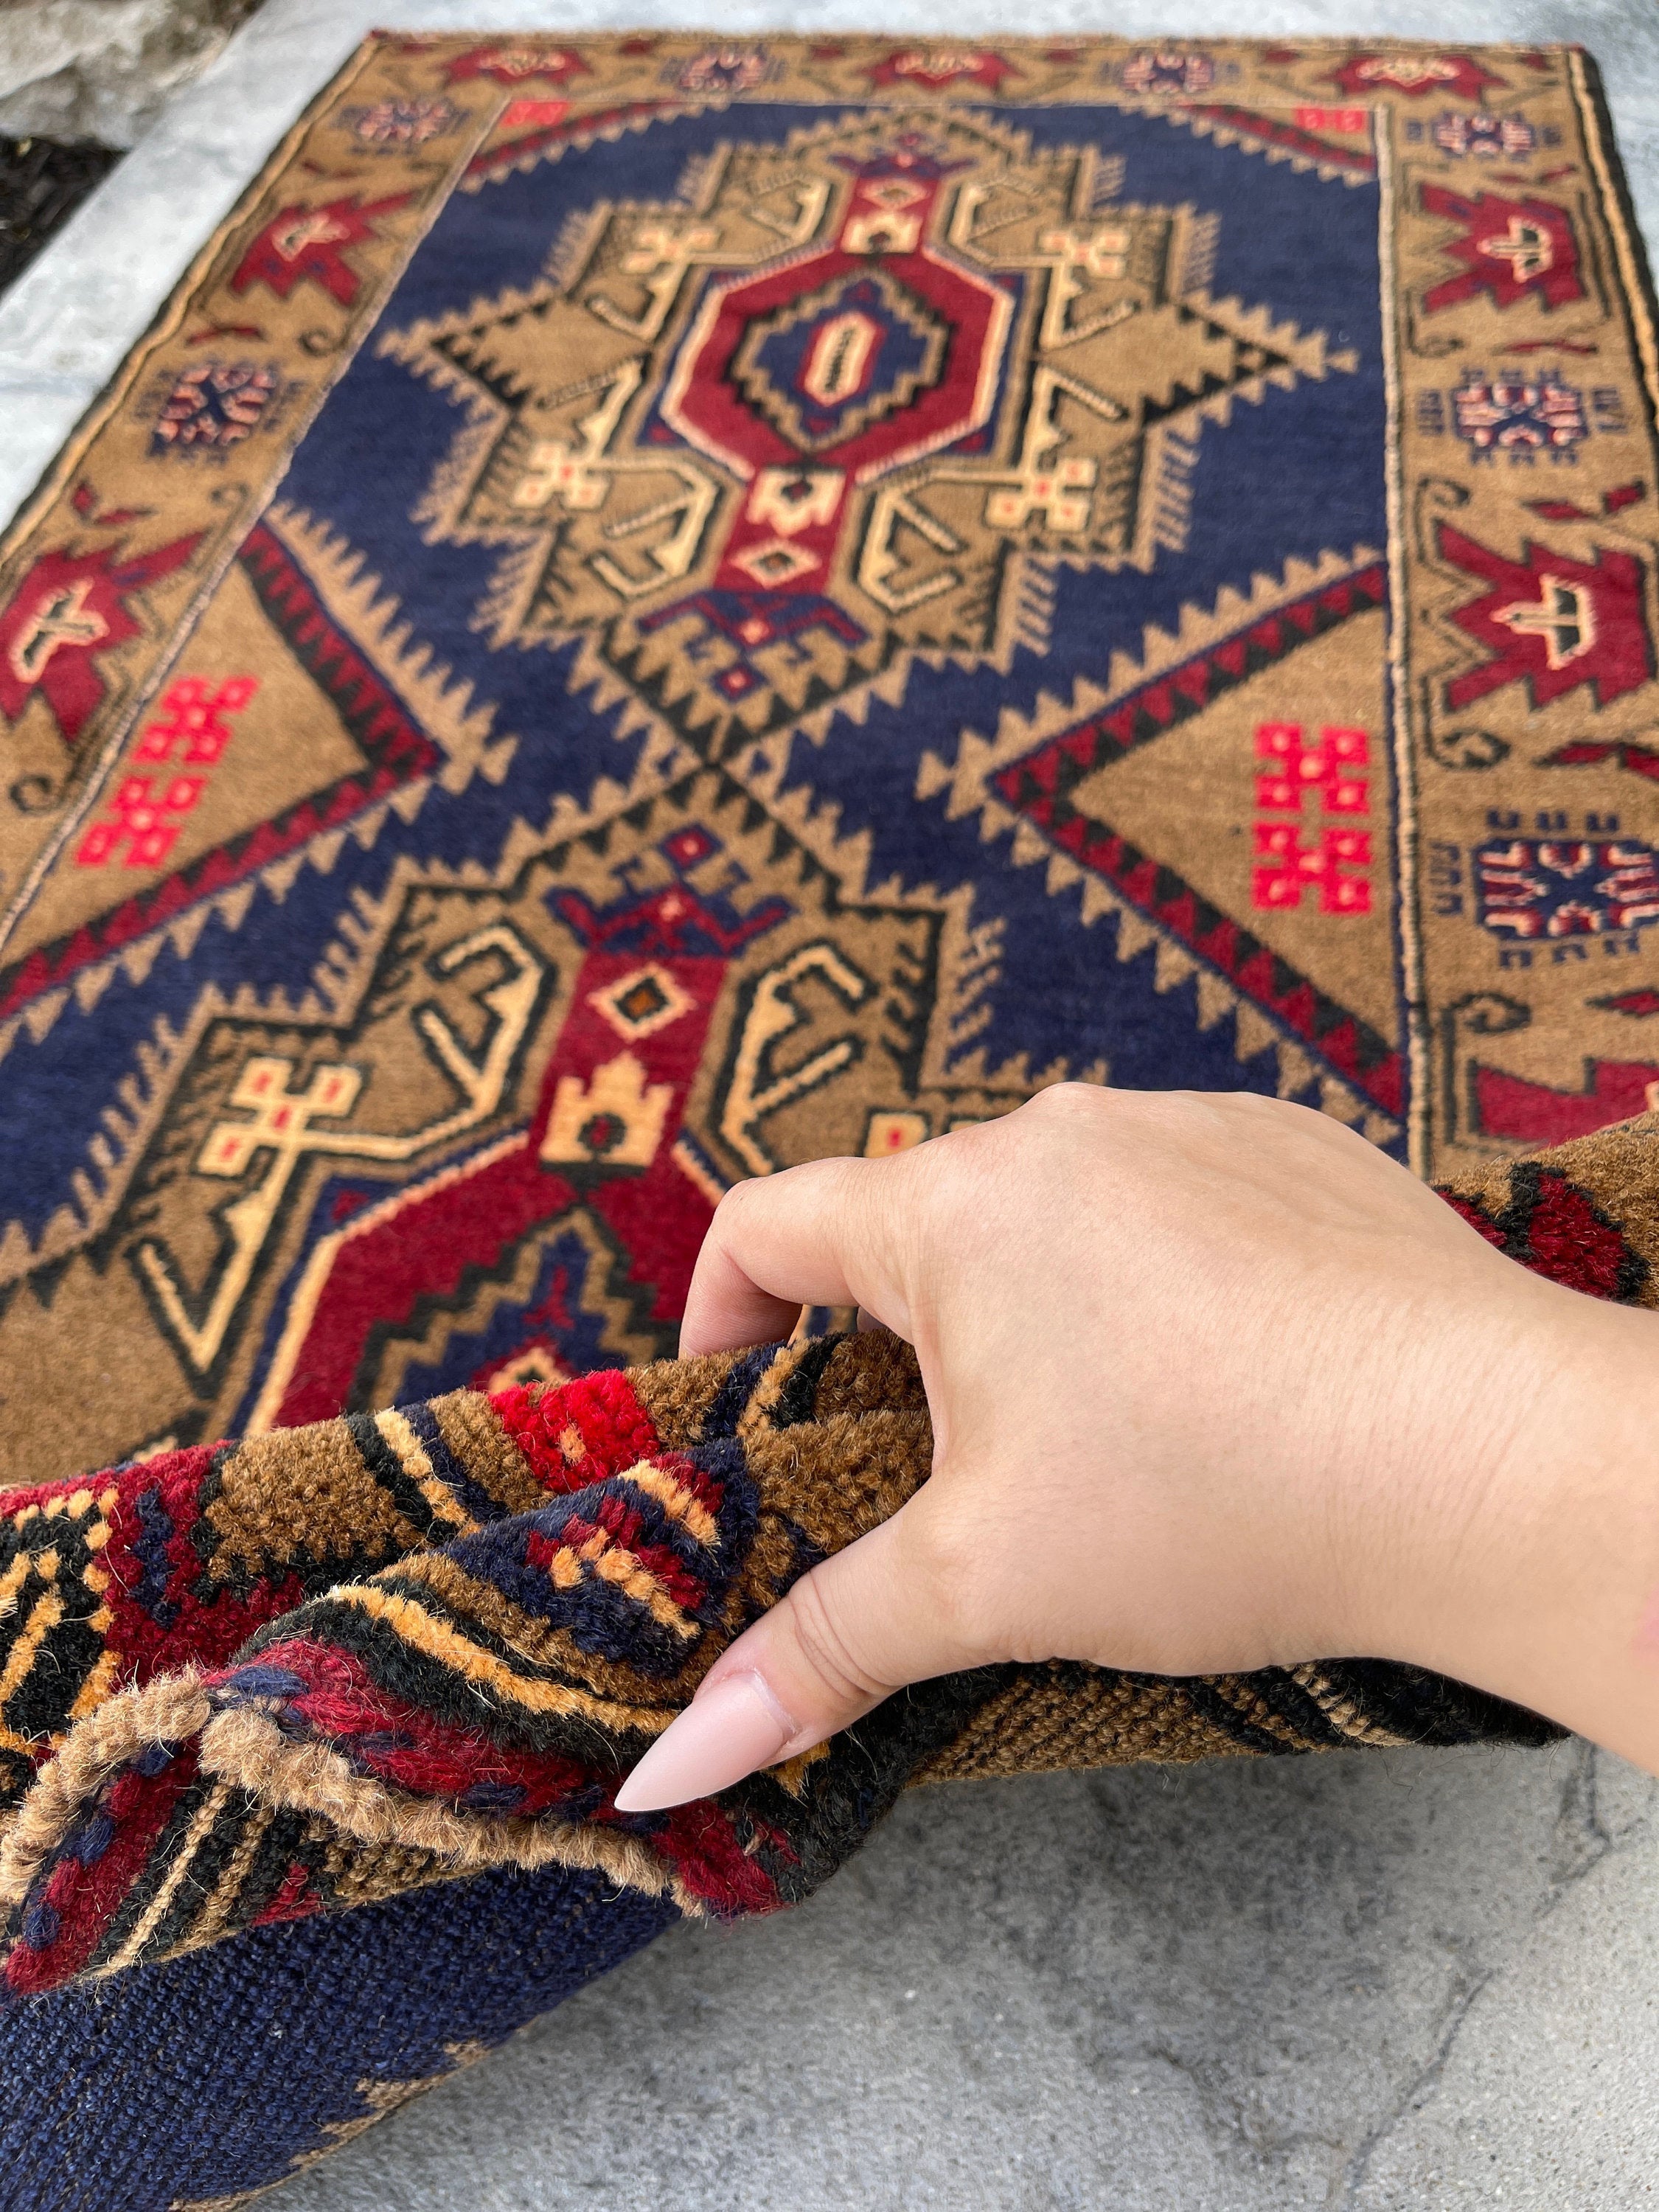 3x5 (90x150) Handmade Vintage Afghan Rug | Indigo Navy Blue Coffee Brown Red | Nomadic Baluch Boho Bohemian Tribal Turkish Moroccan Wool